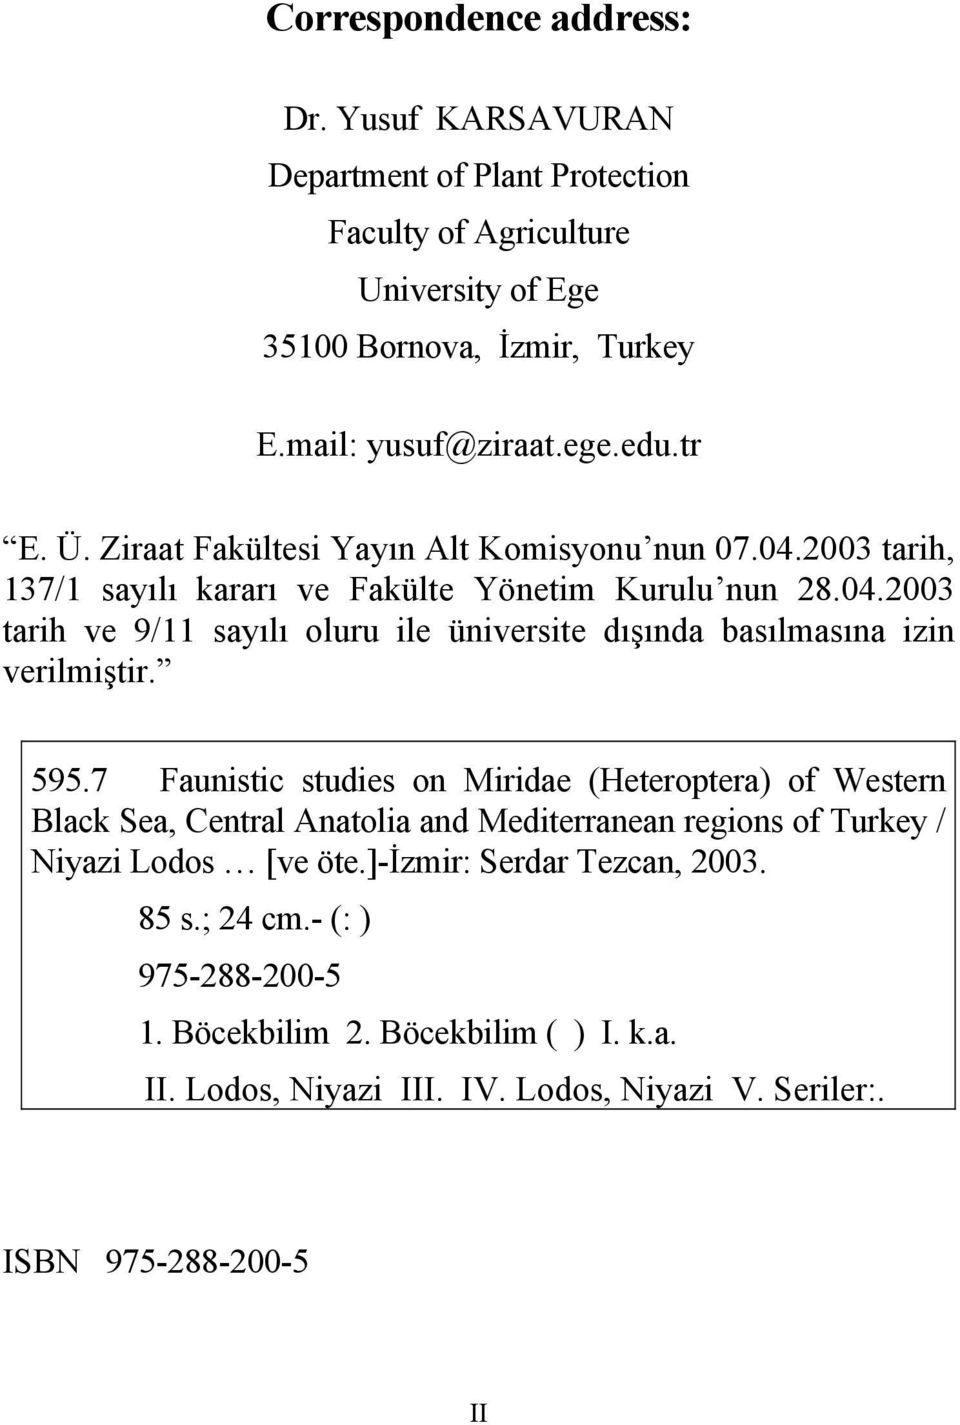 595.7 Faunistic studies on Miridae (Heteroptera) of Western Black Sea, Central Anatolia and Mediterranean regions of Turkey / Niyazi Lodos [ve öte.]-izmir: Serdar Tezcan, 2003.